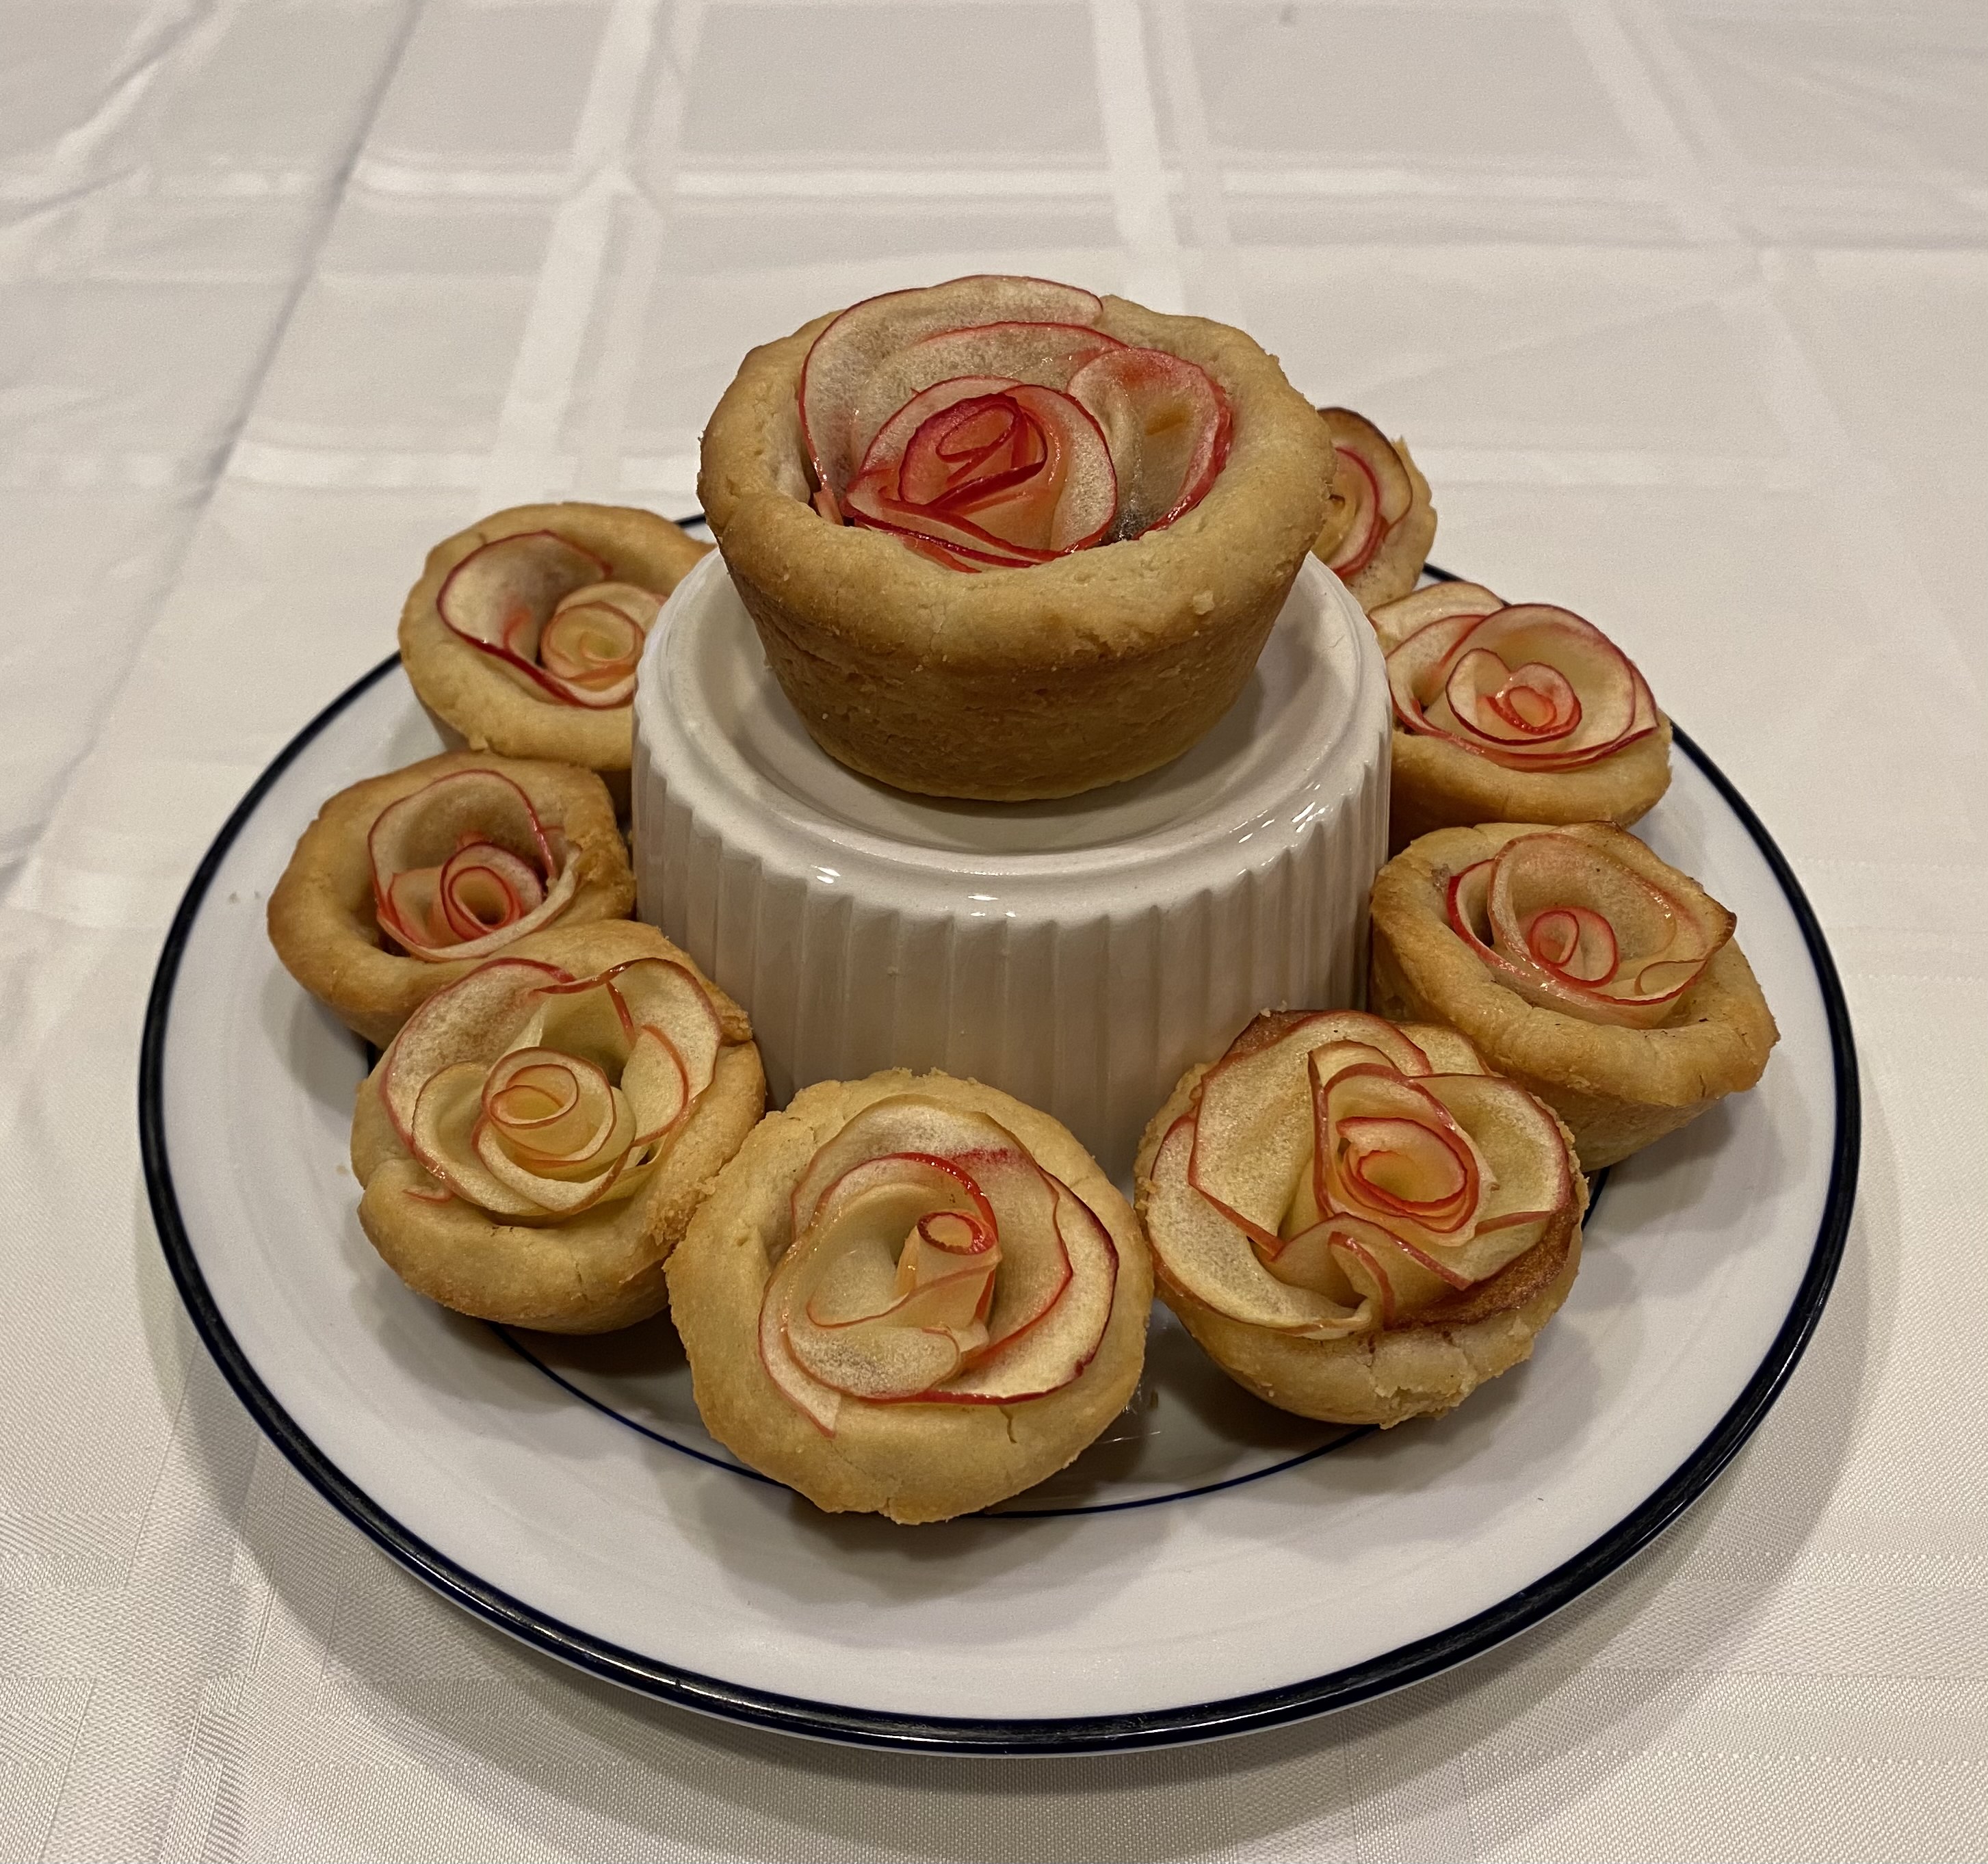 Apple rose pastries